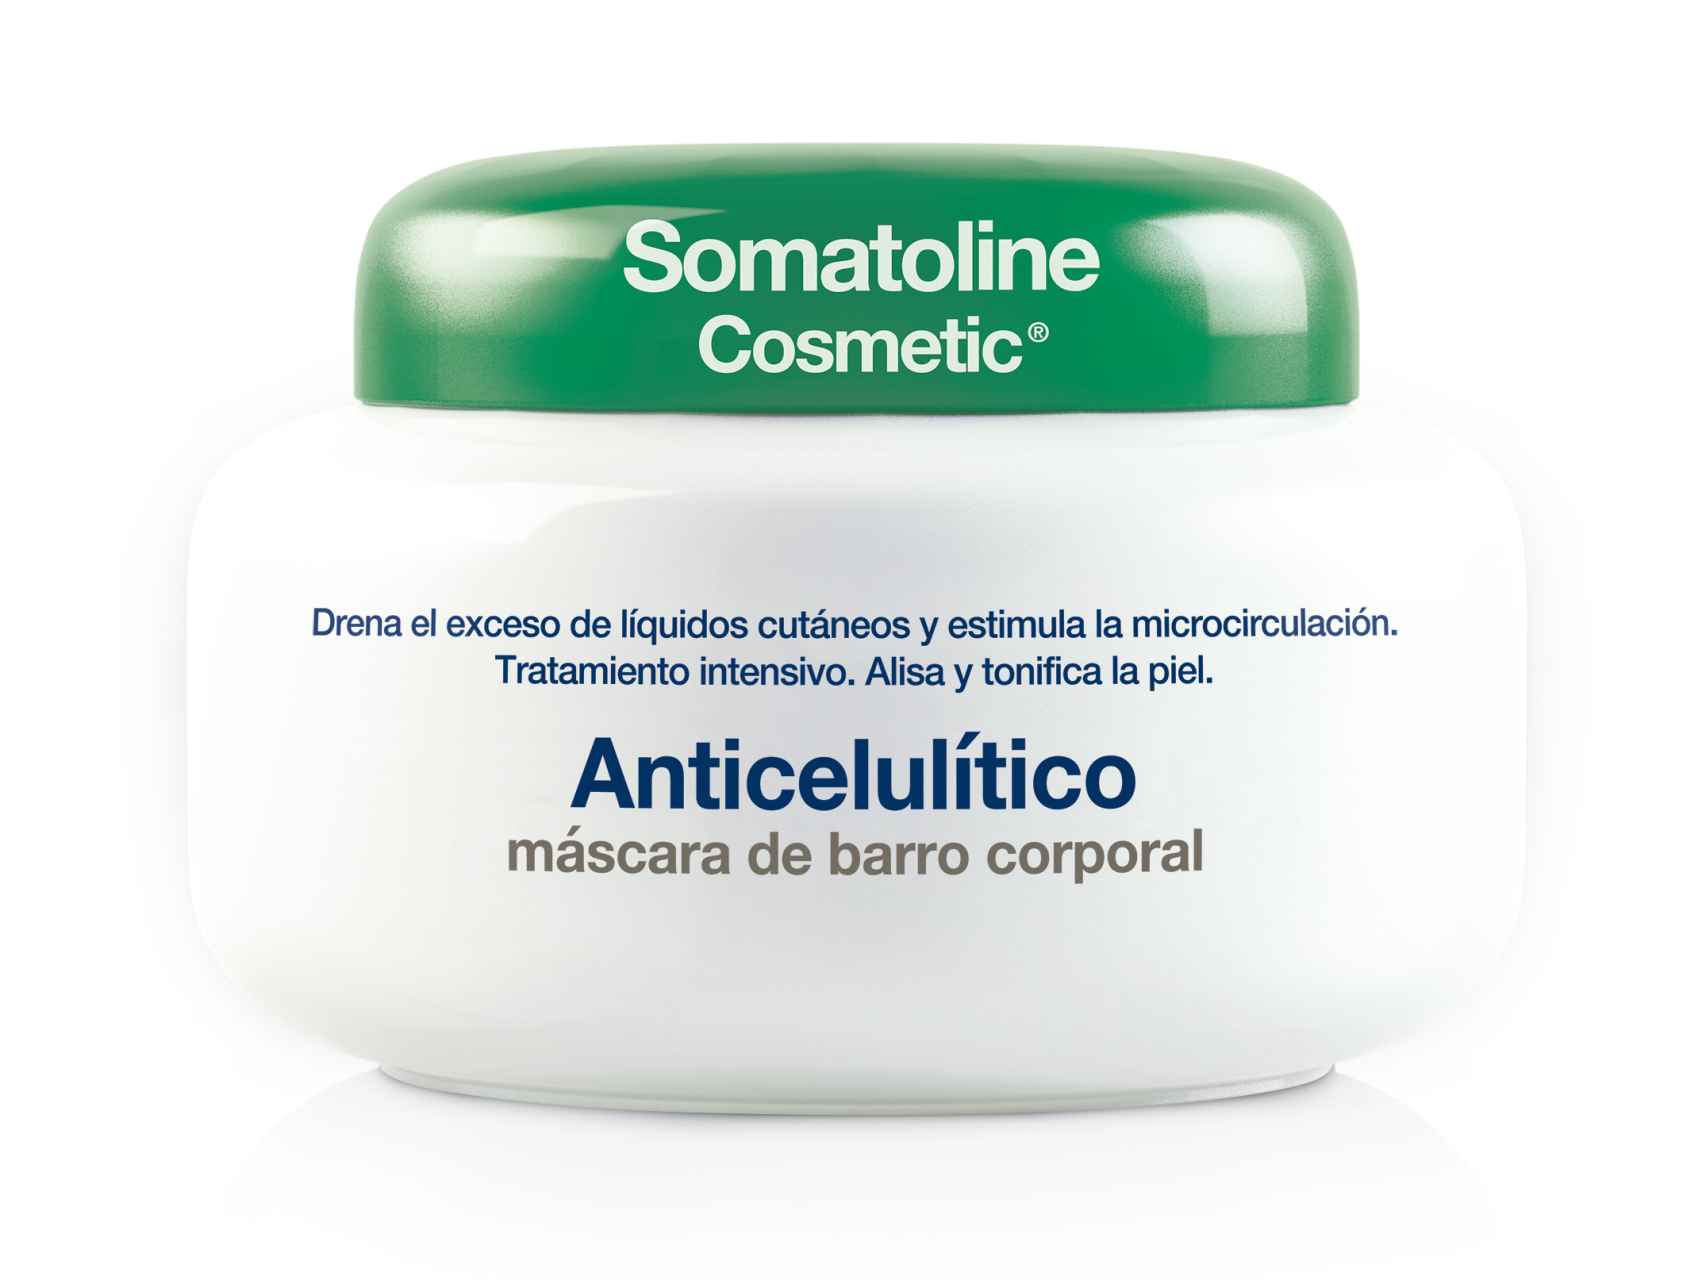 Somatoline anticelulítico máscara corporal.